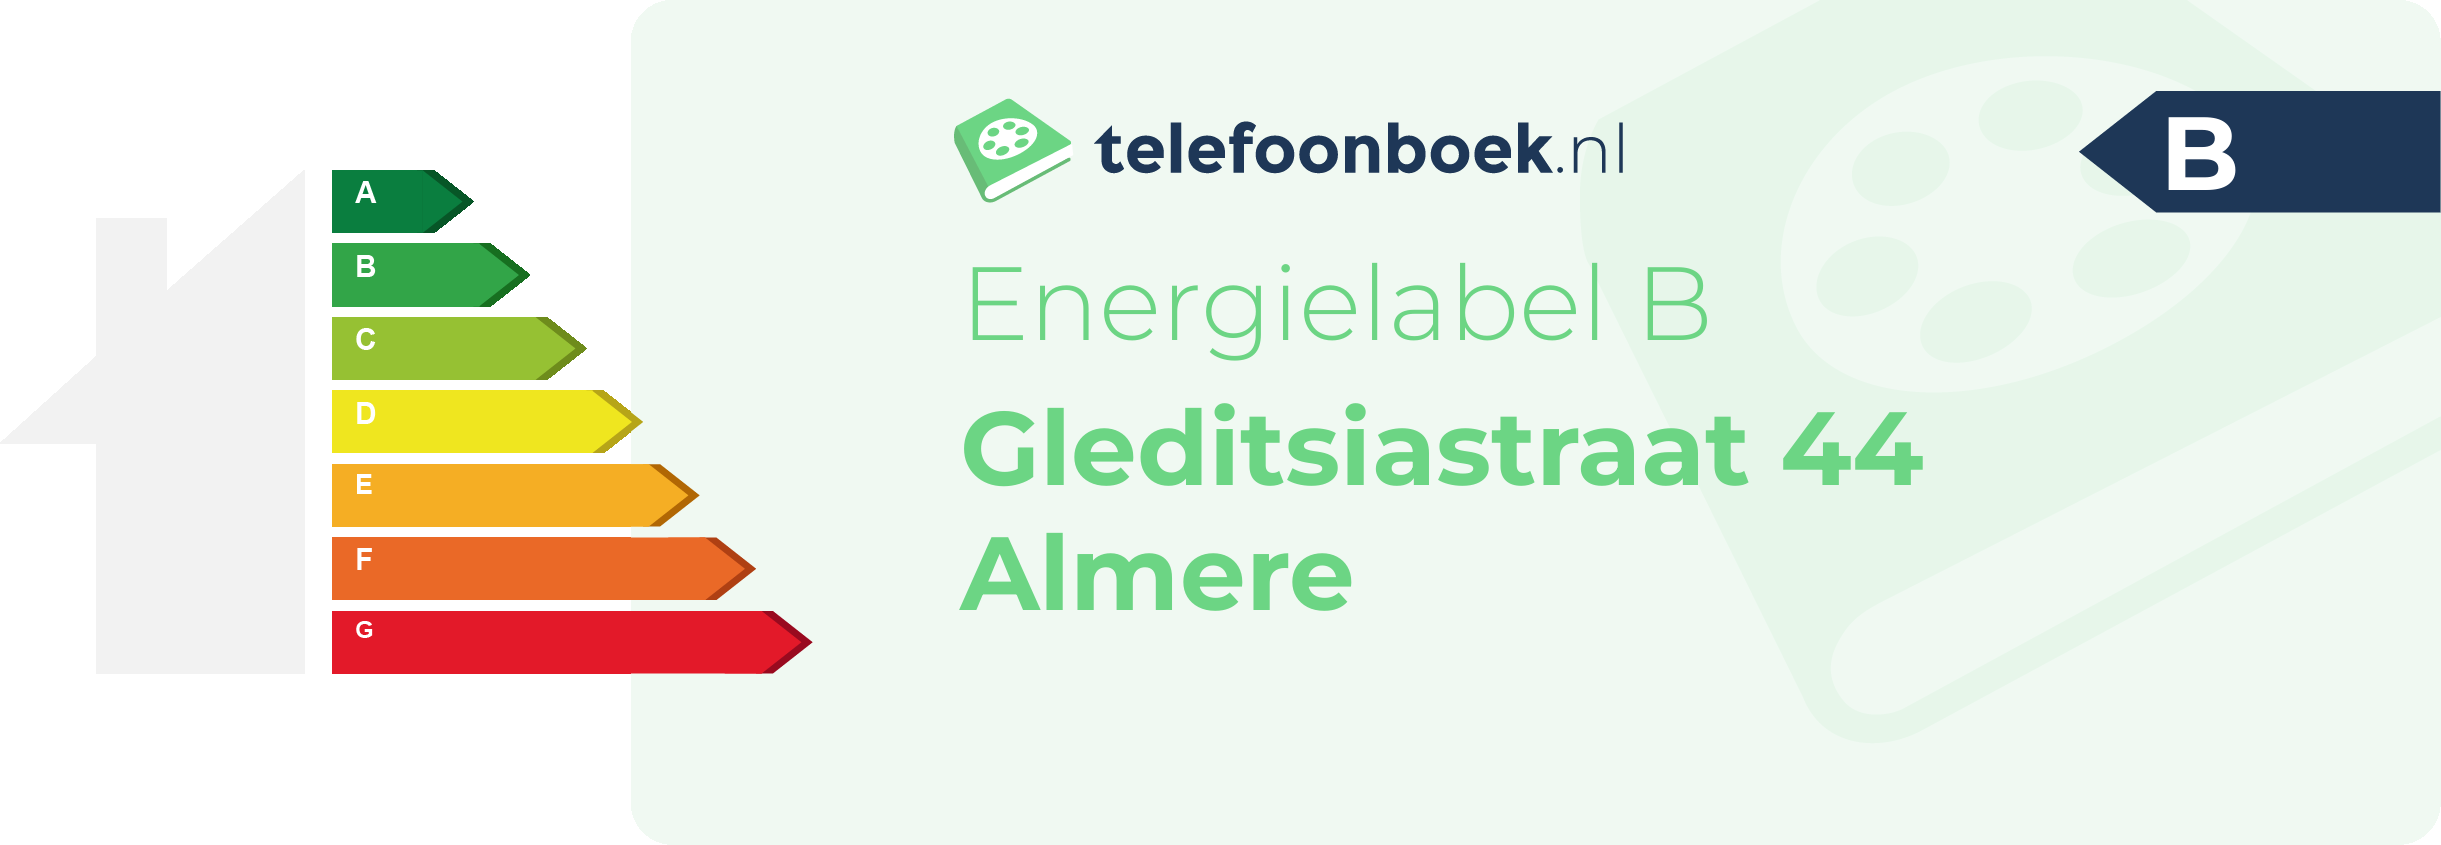 Energielabel Gleditsiastraat 44 Almere